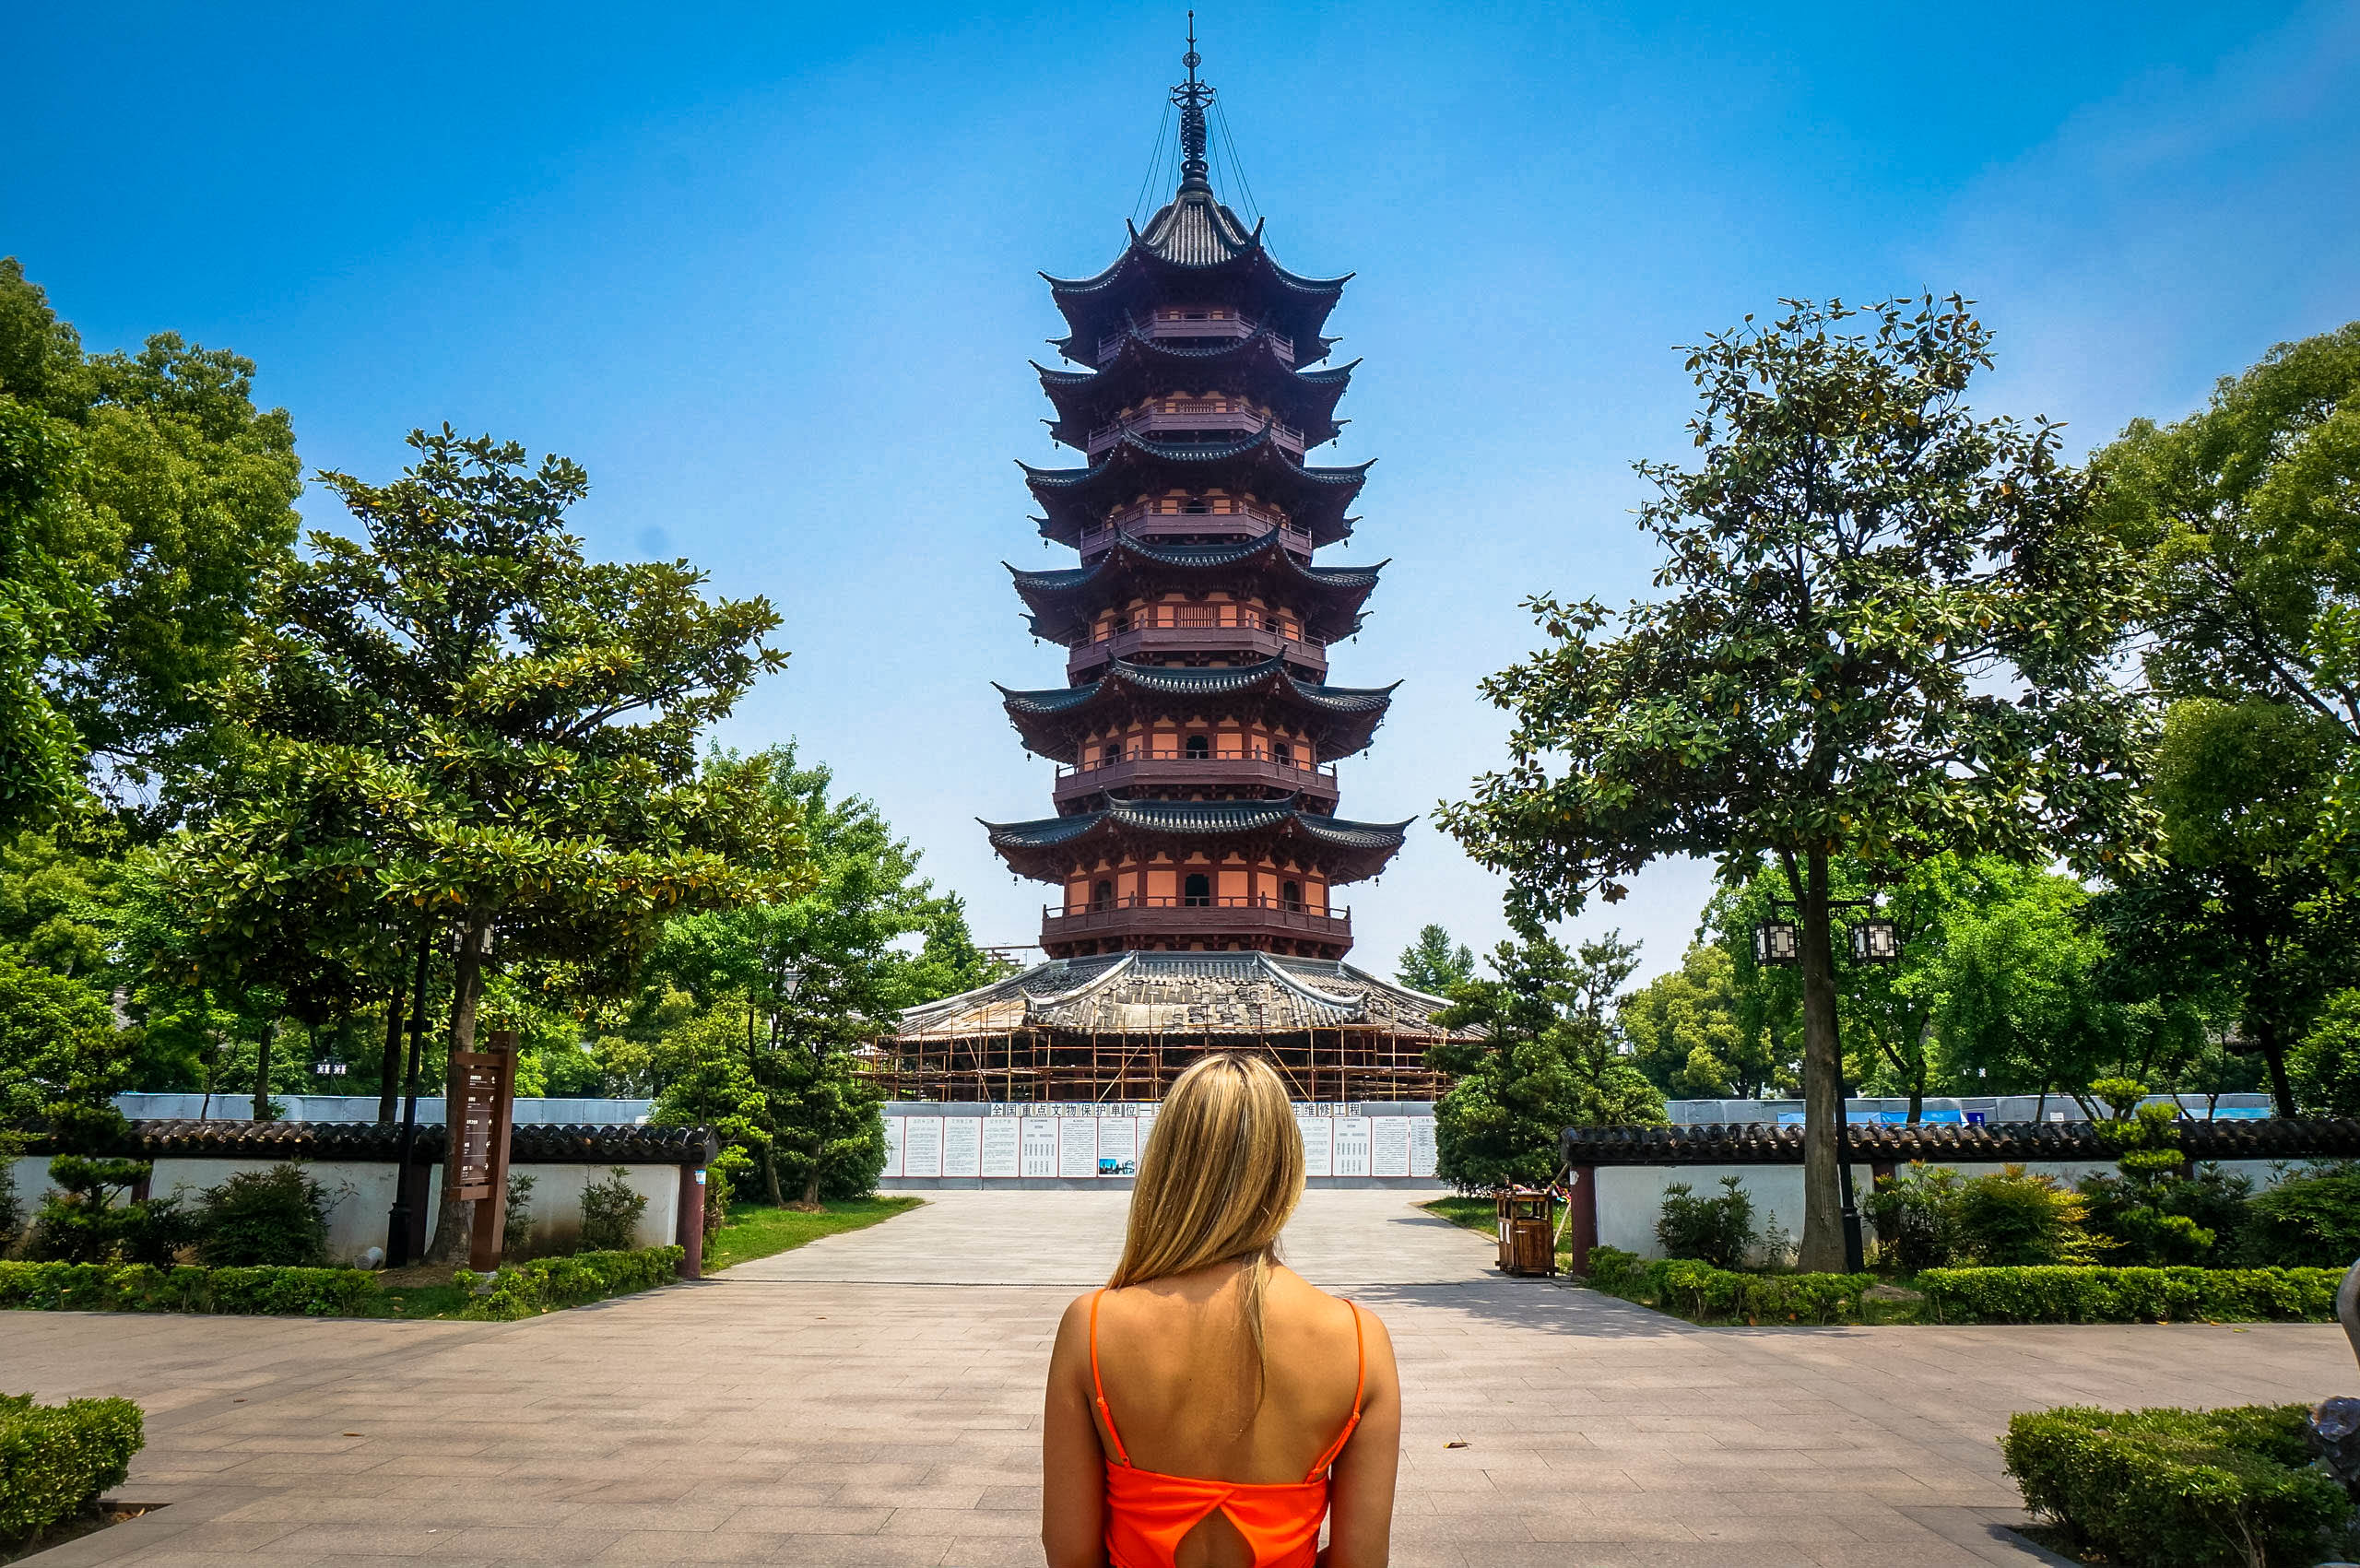 Onwards: Shanghai Pagoda